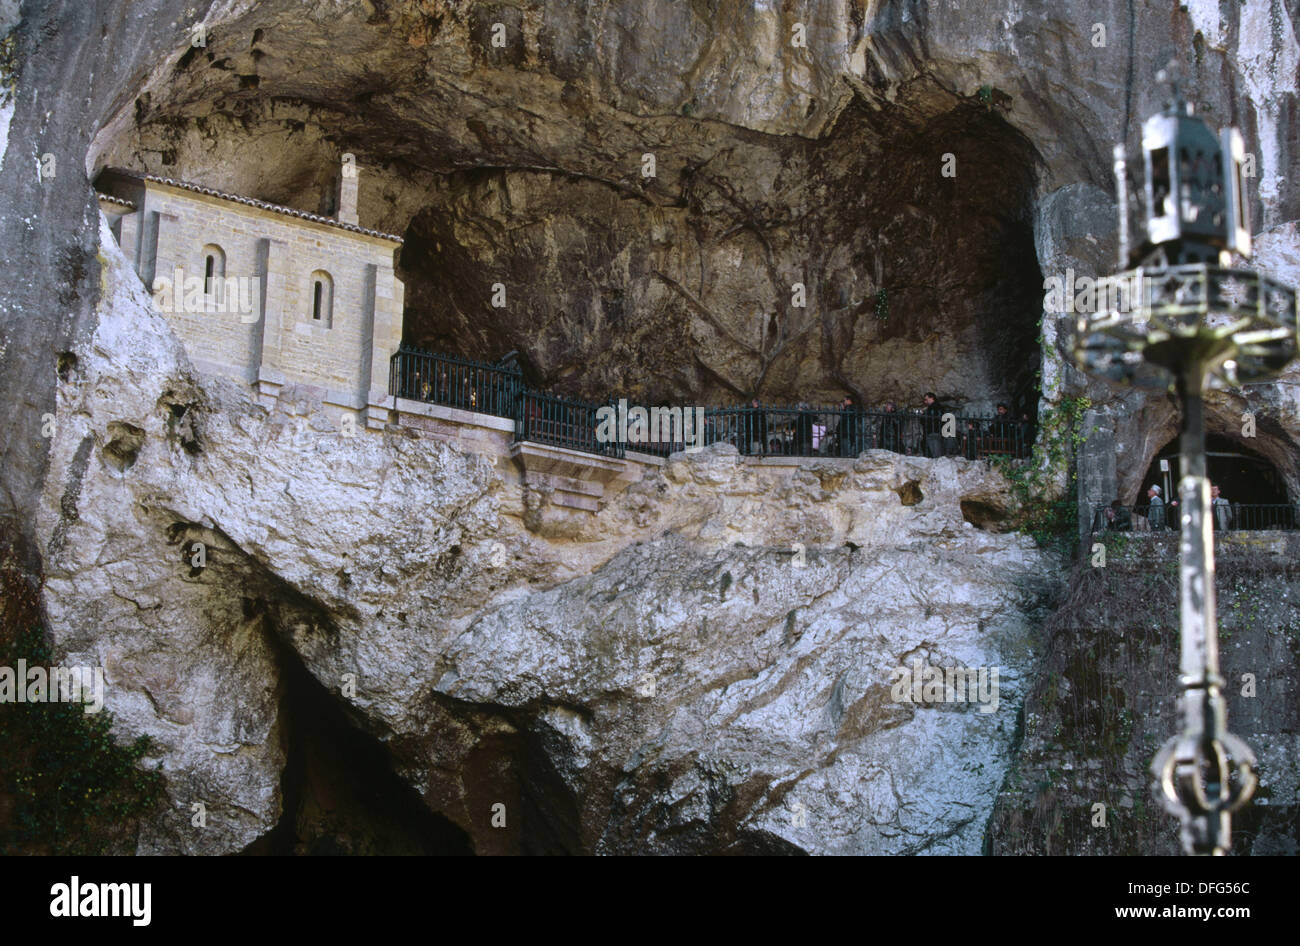 Cueva de la Santina. Covadonga. Spain Stock Photo: 61206276 - Alamy